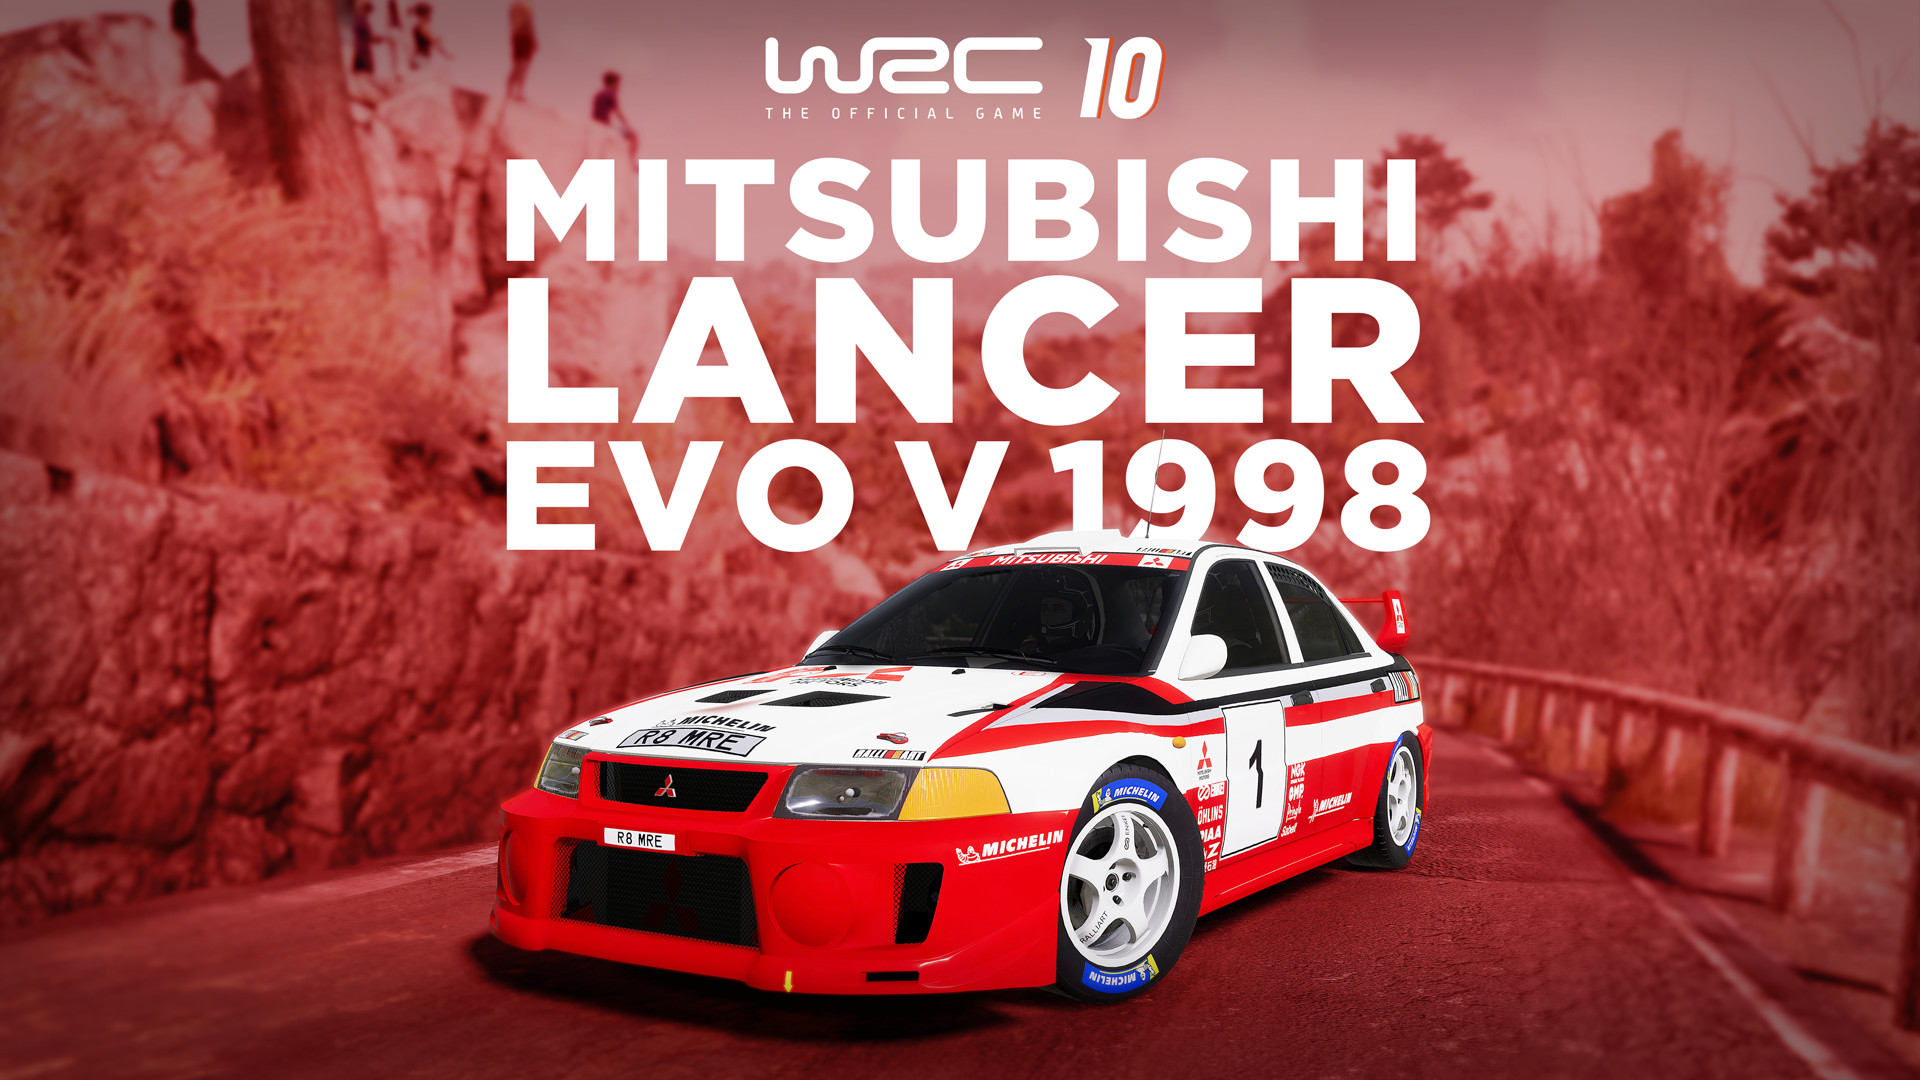 WRC 10 - Mitsubishi Lancer Evo V 1998 DLC Steam CD Key [$ 2.69]